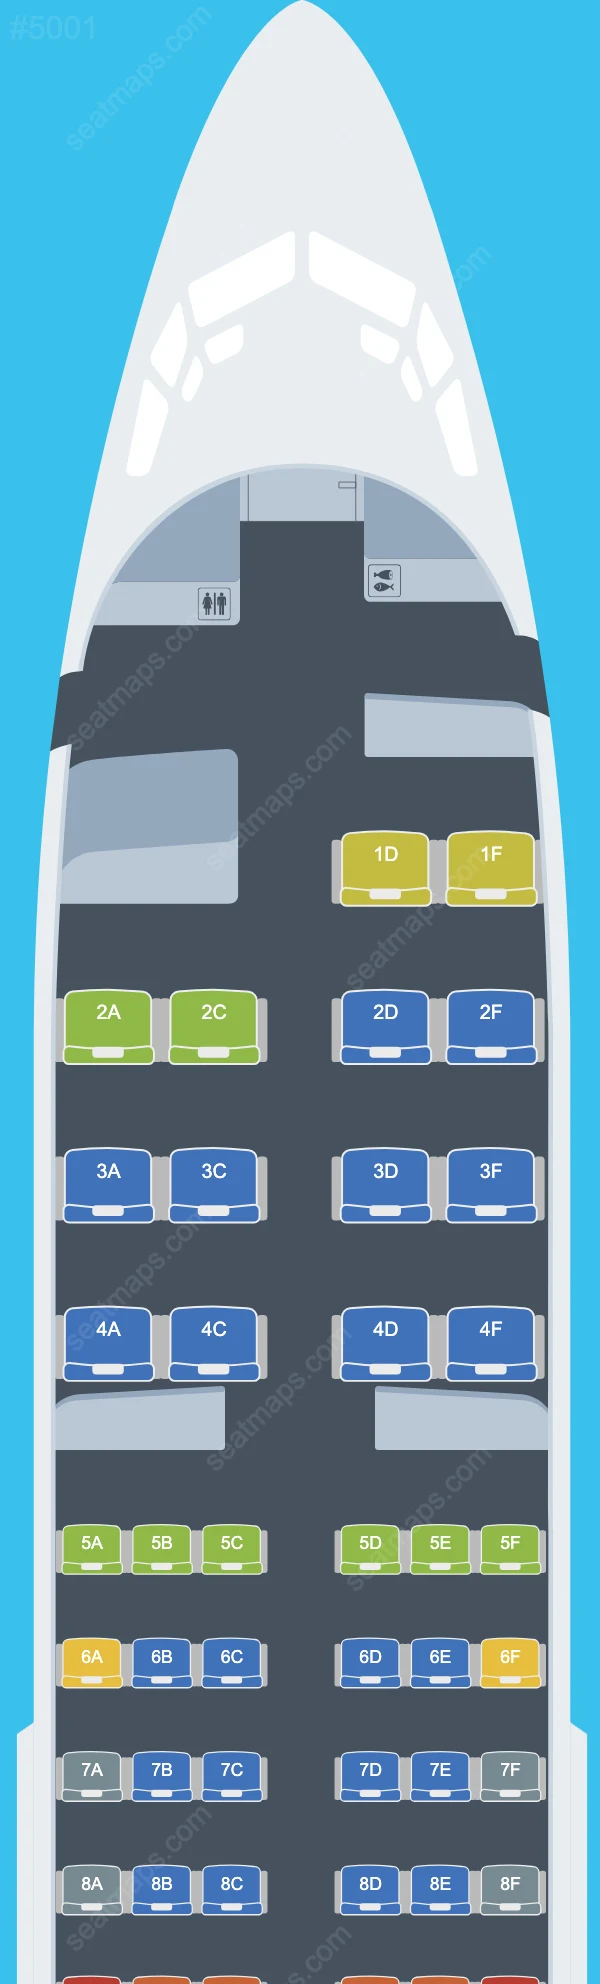 Tarom Boeing 737 Seat Maps 737-700